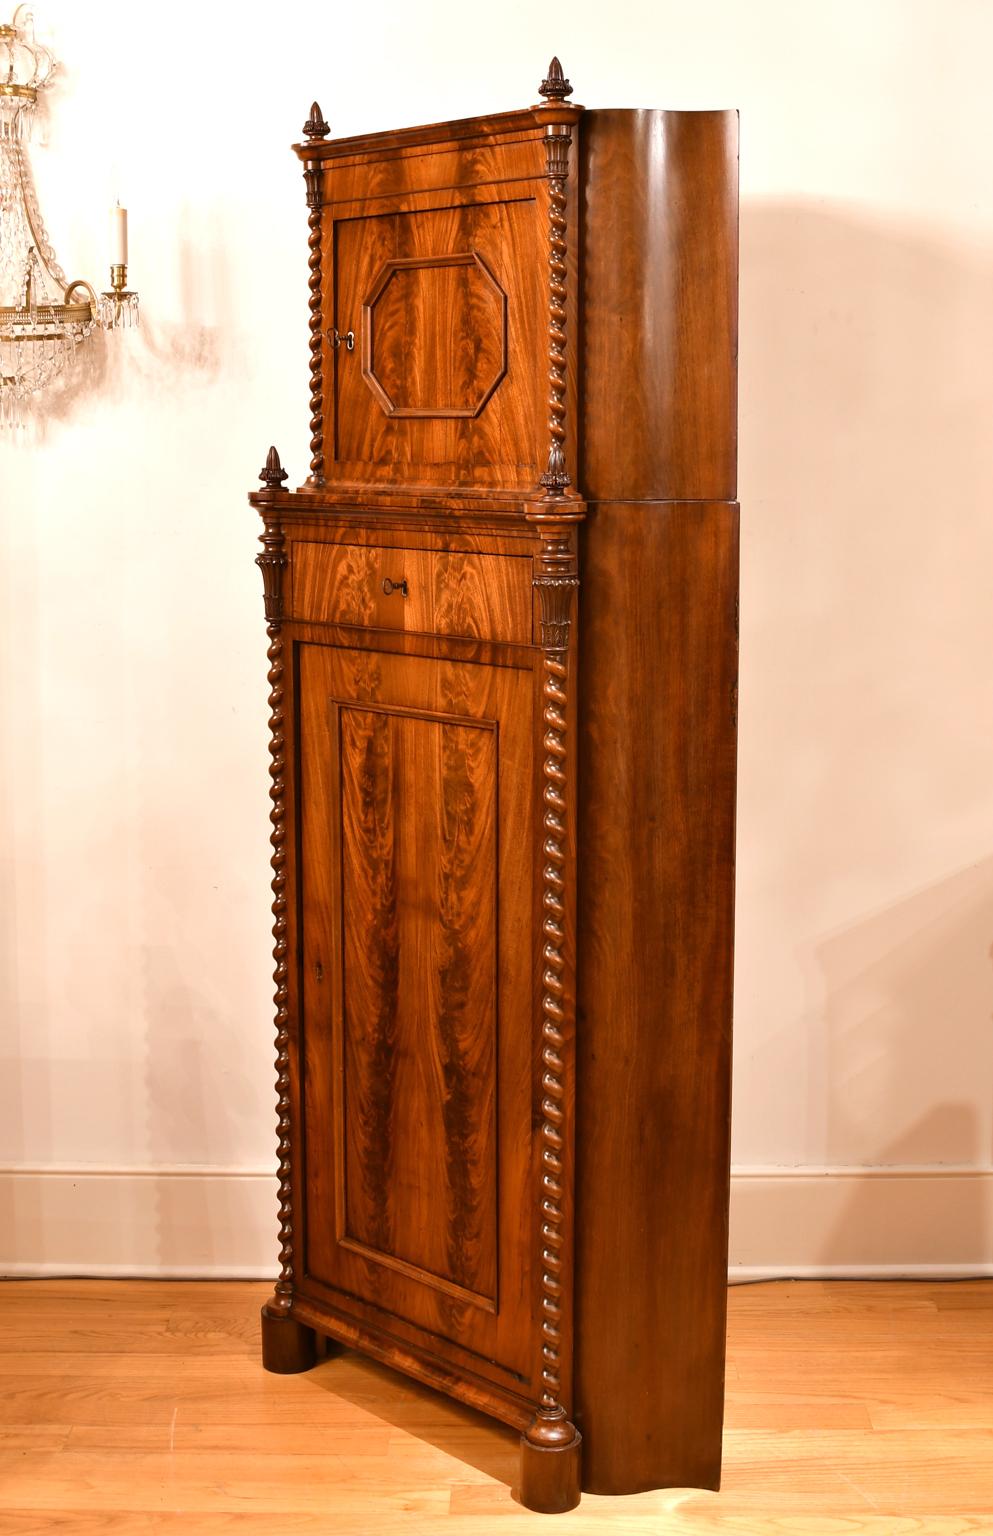 Turned Antique Empire Corner Cupboard/ Cabinet in West Indies Mahogany, Denmark, c 1825